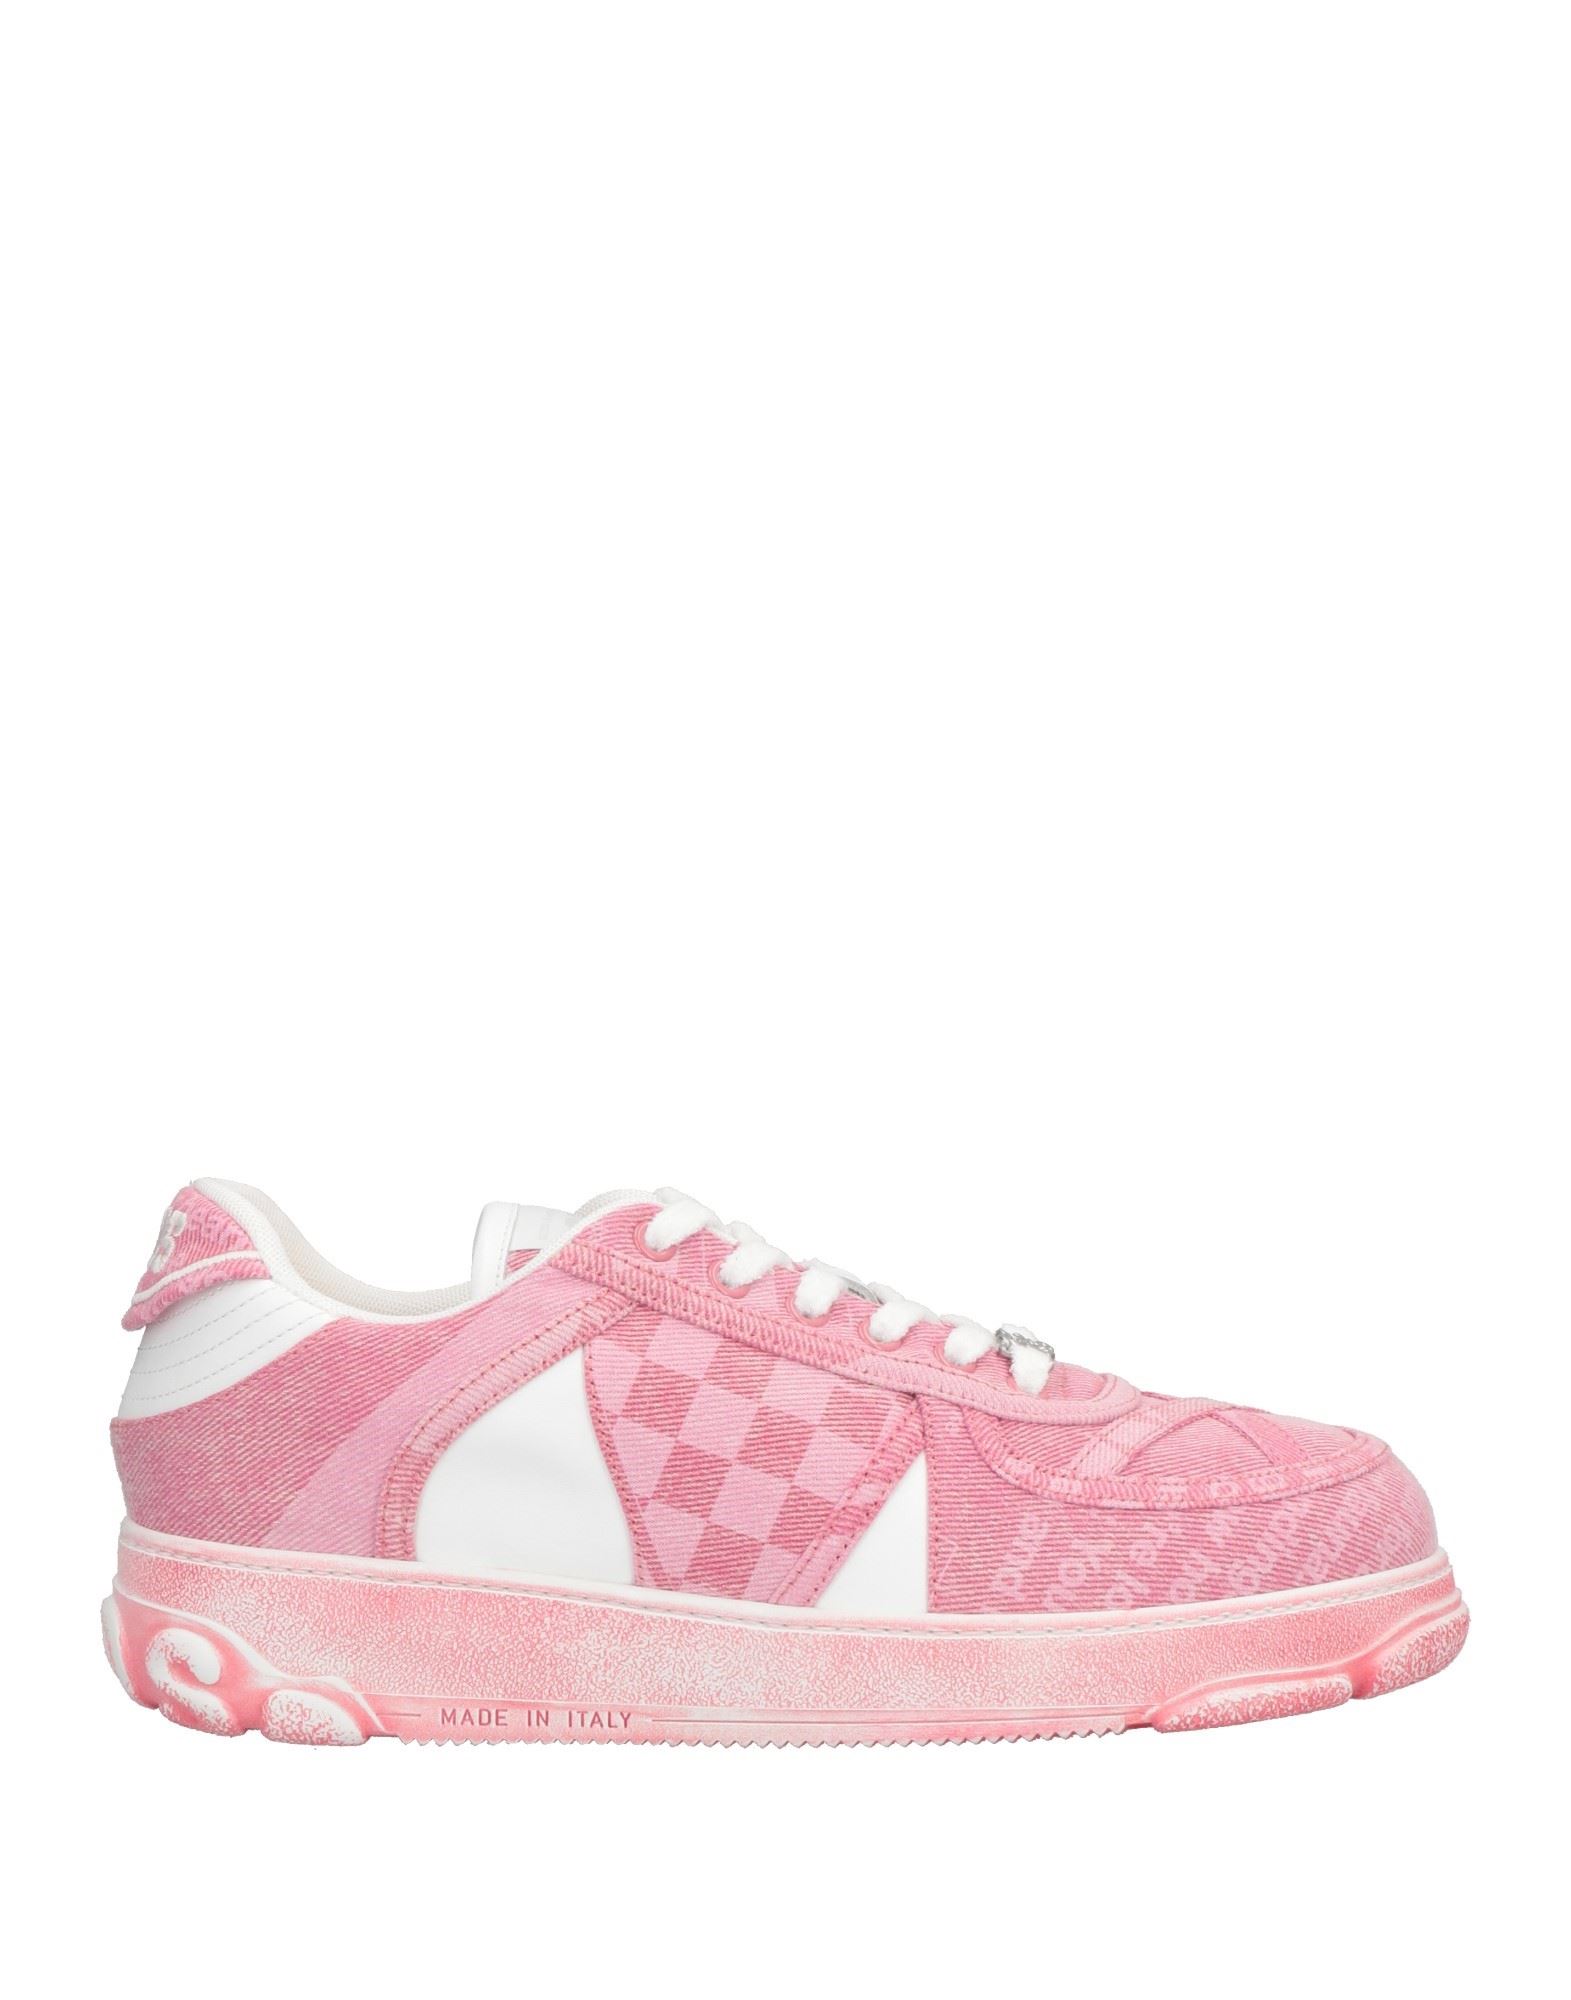 Shop Gcds Man Sneakers Pink Size 9 Soft Leather, Textile Fibers